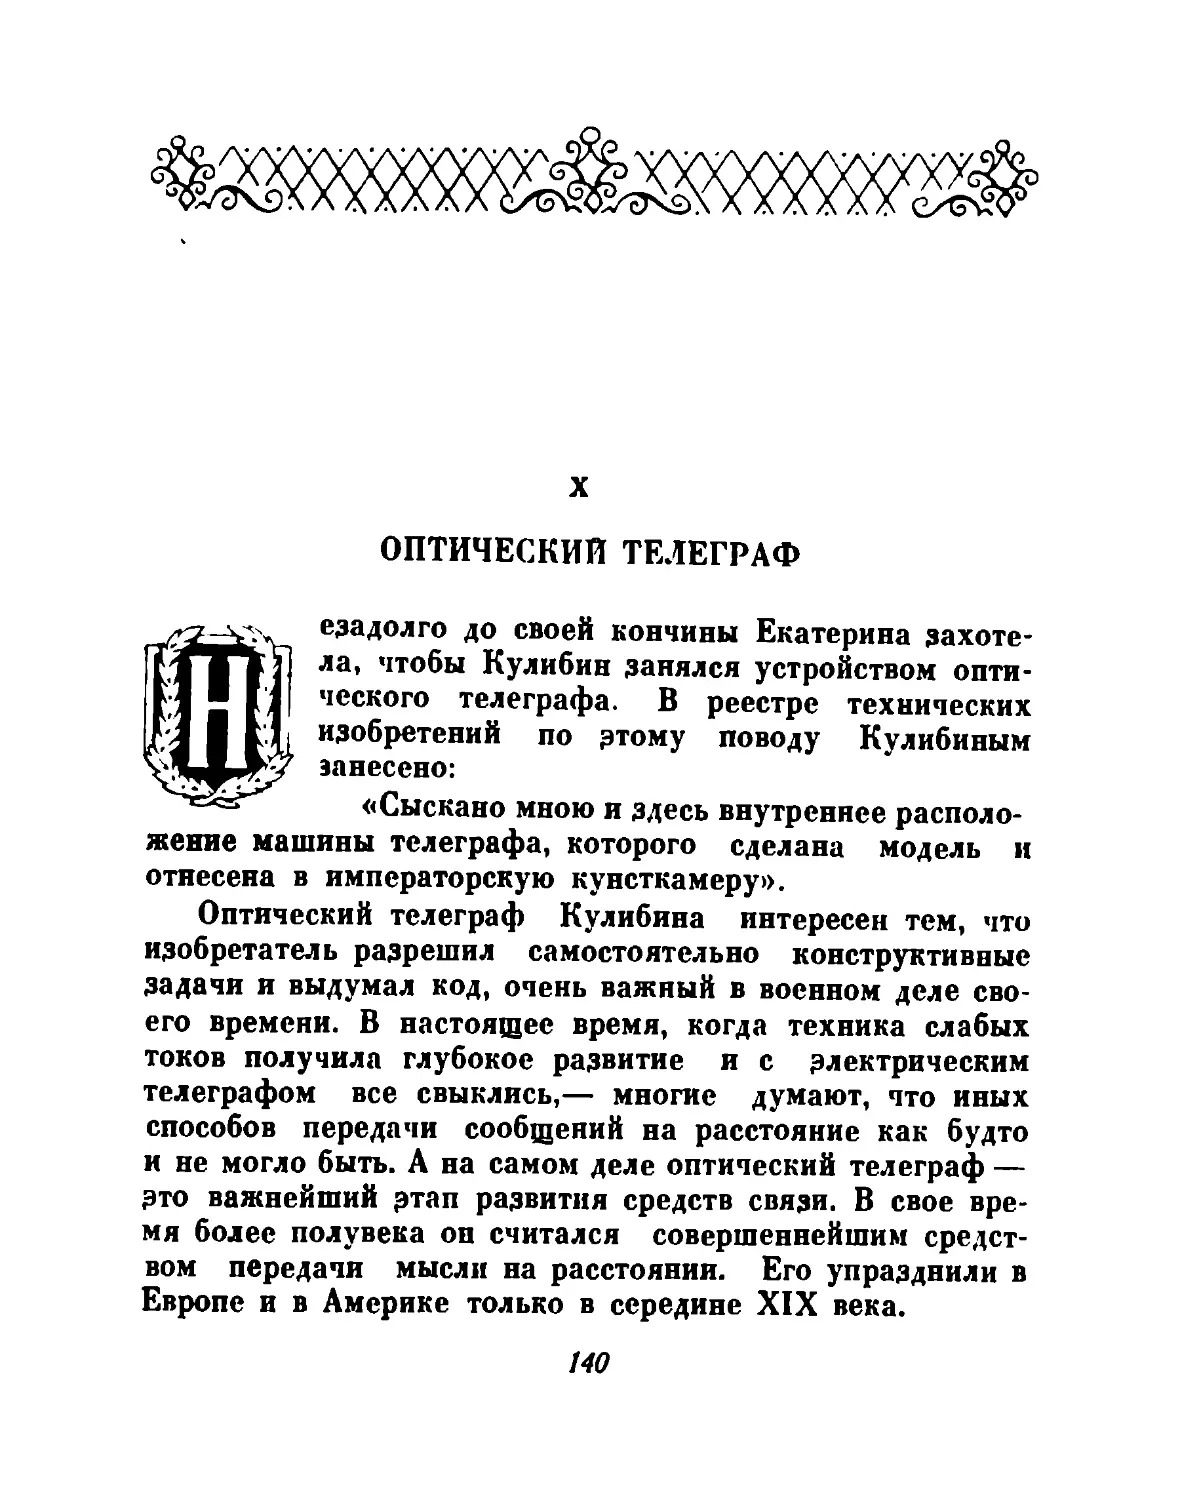 X. Оптический телеграф